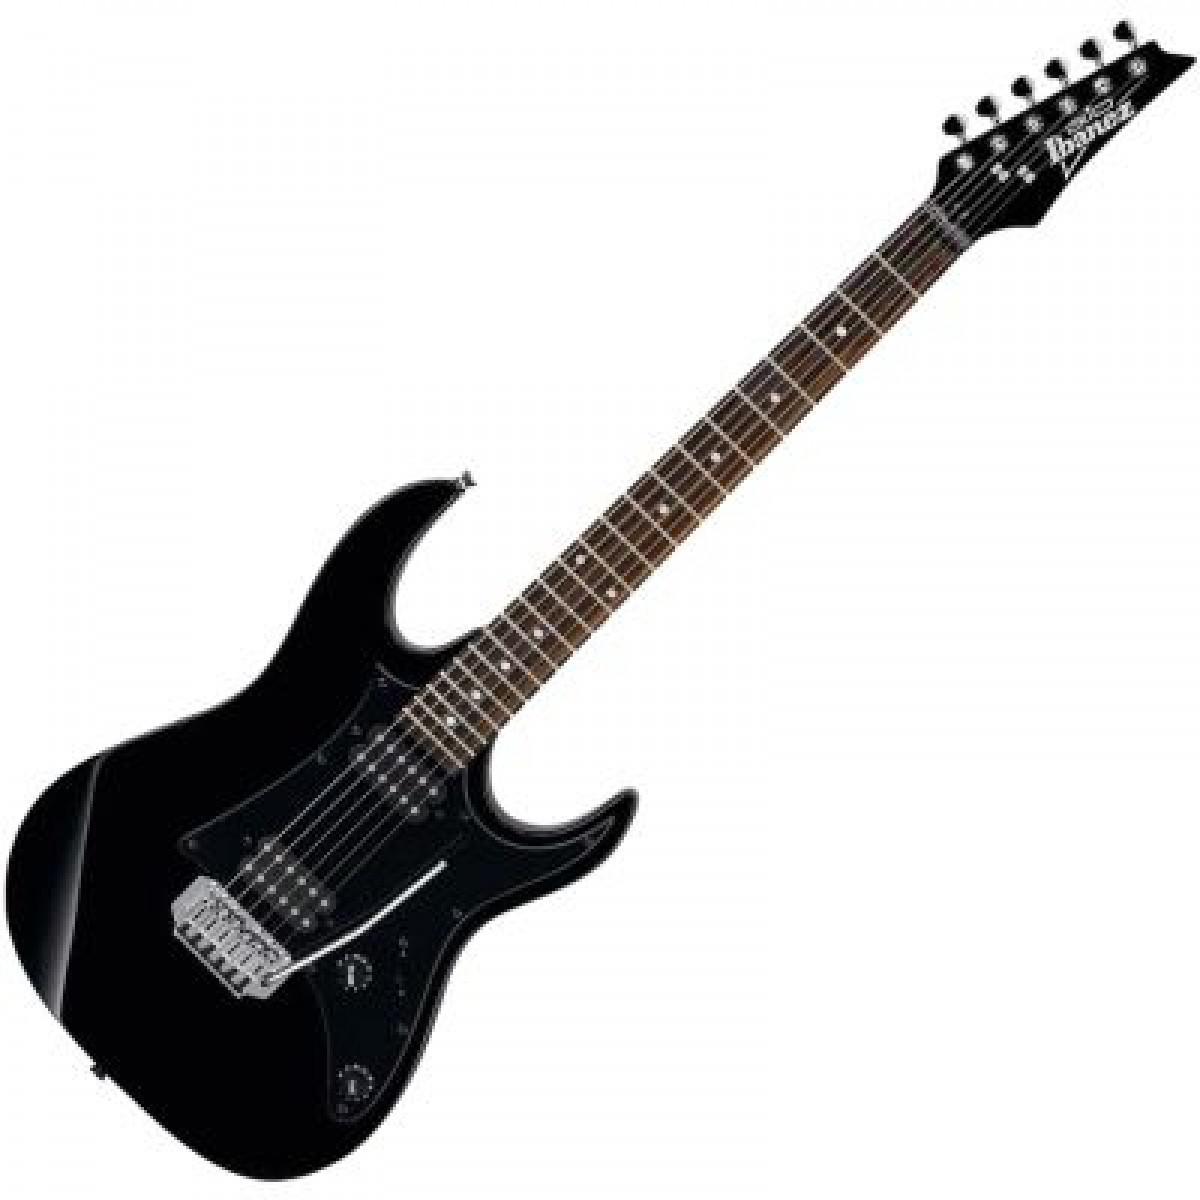 Ibañez - Guitarra Eléctrica RX, Color: Negra Mod.GRX20-BKN_40